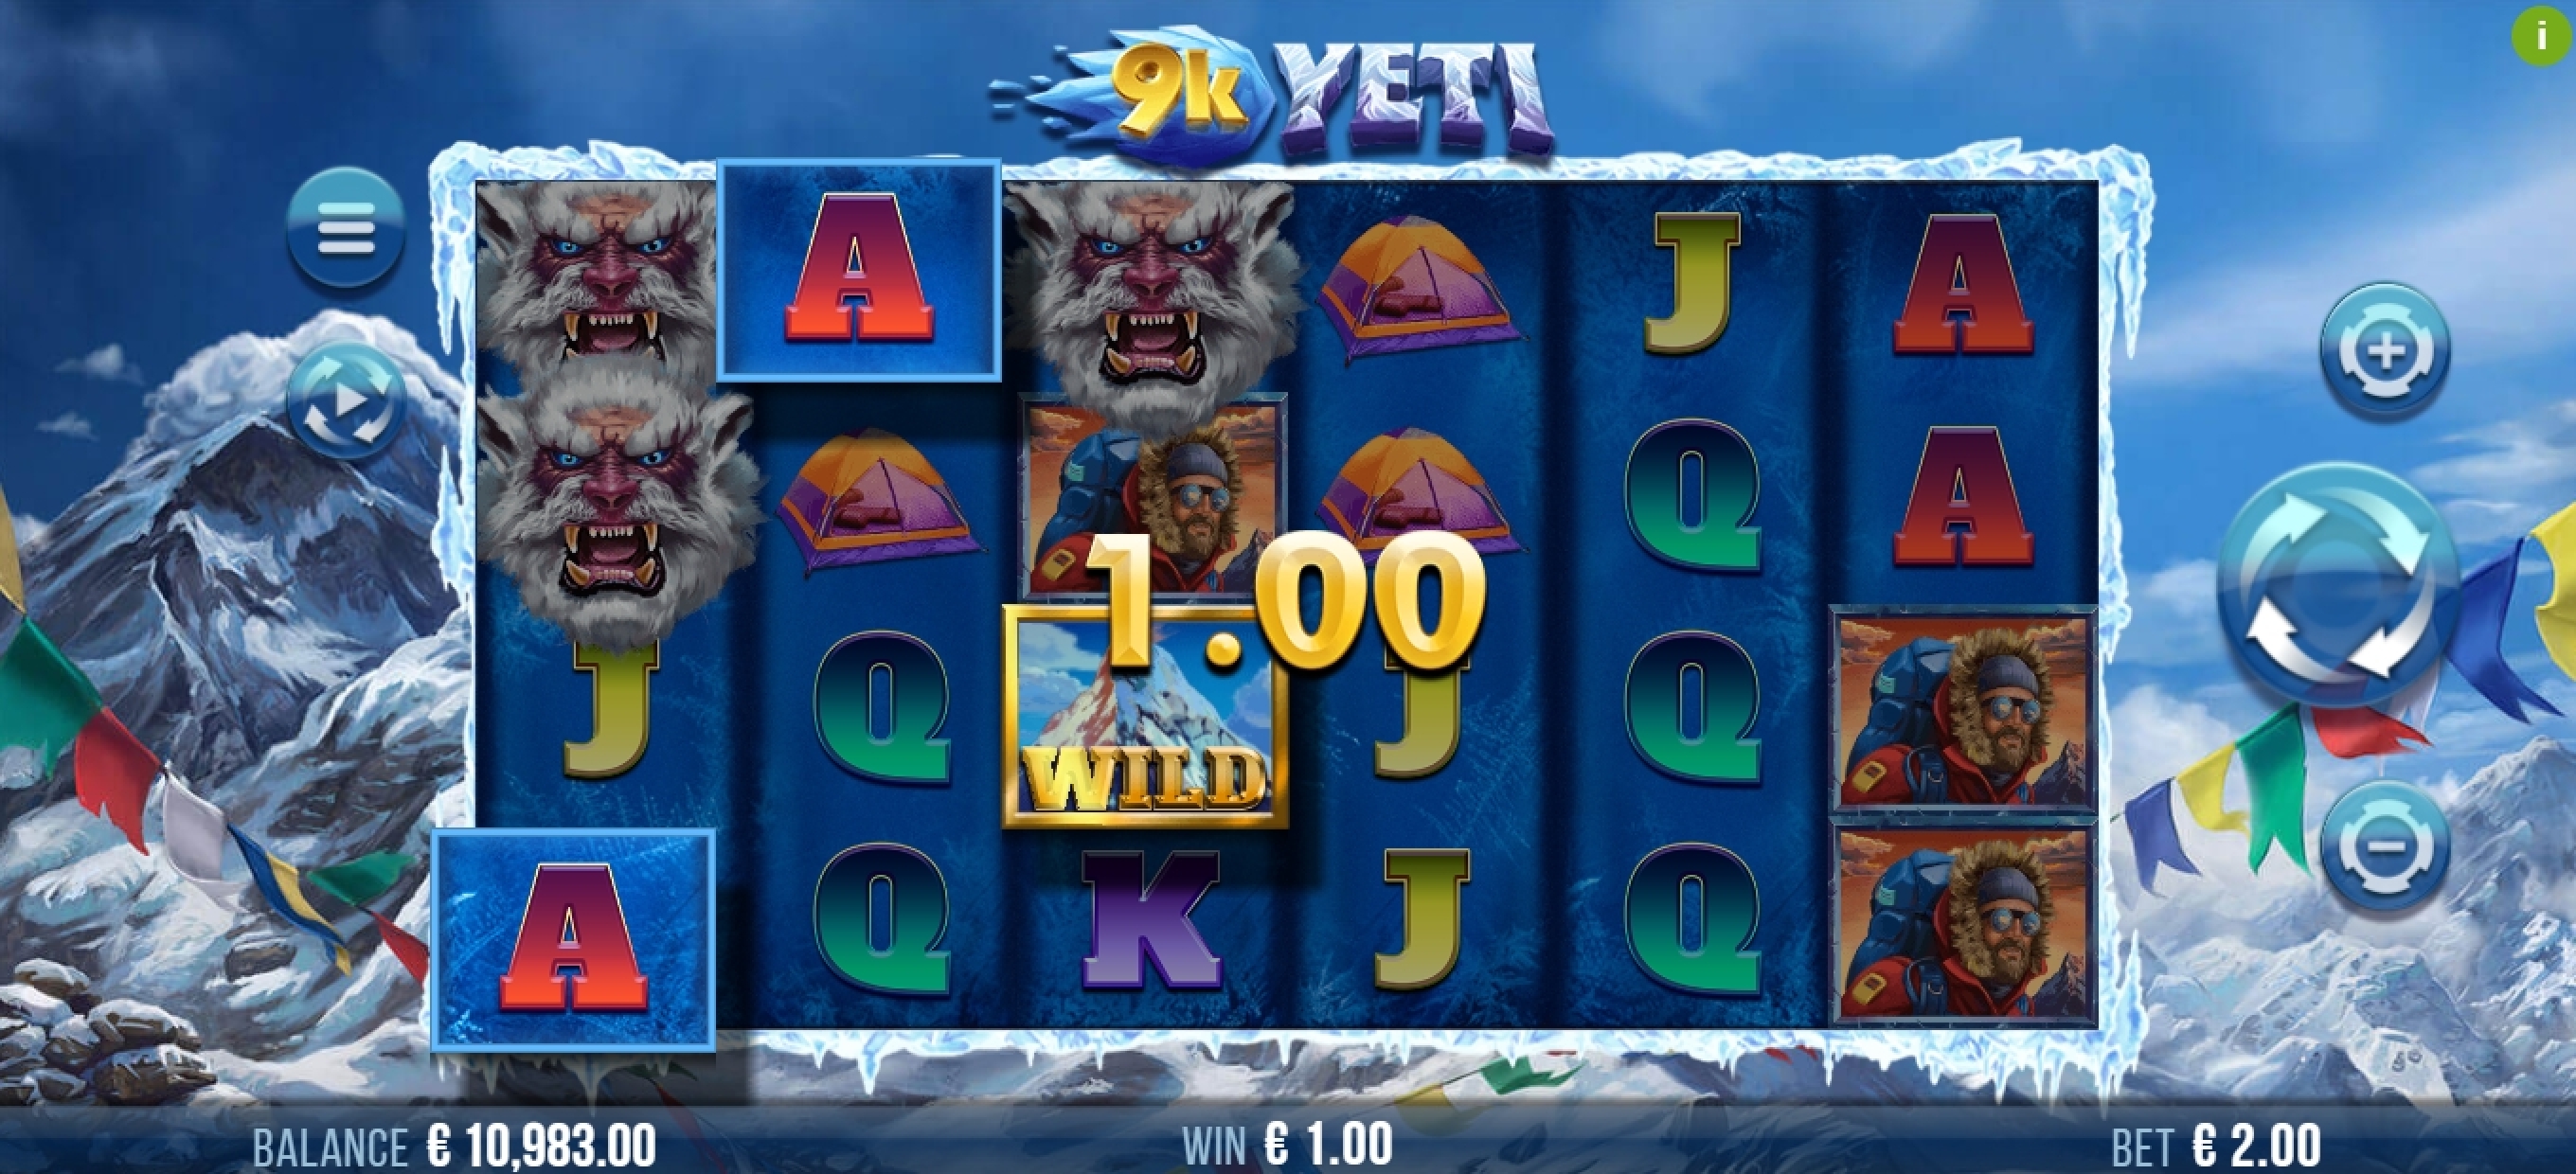 Win Money in 9K Yeti Free Slot Game by 4ThePlayer